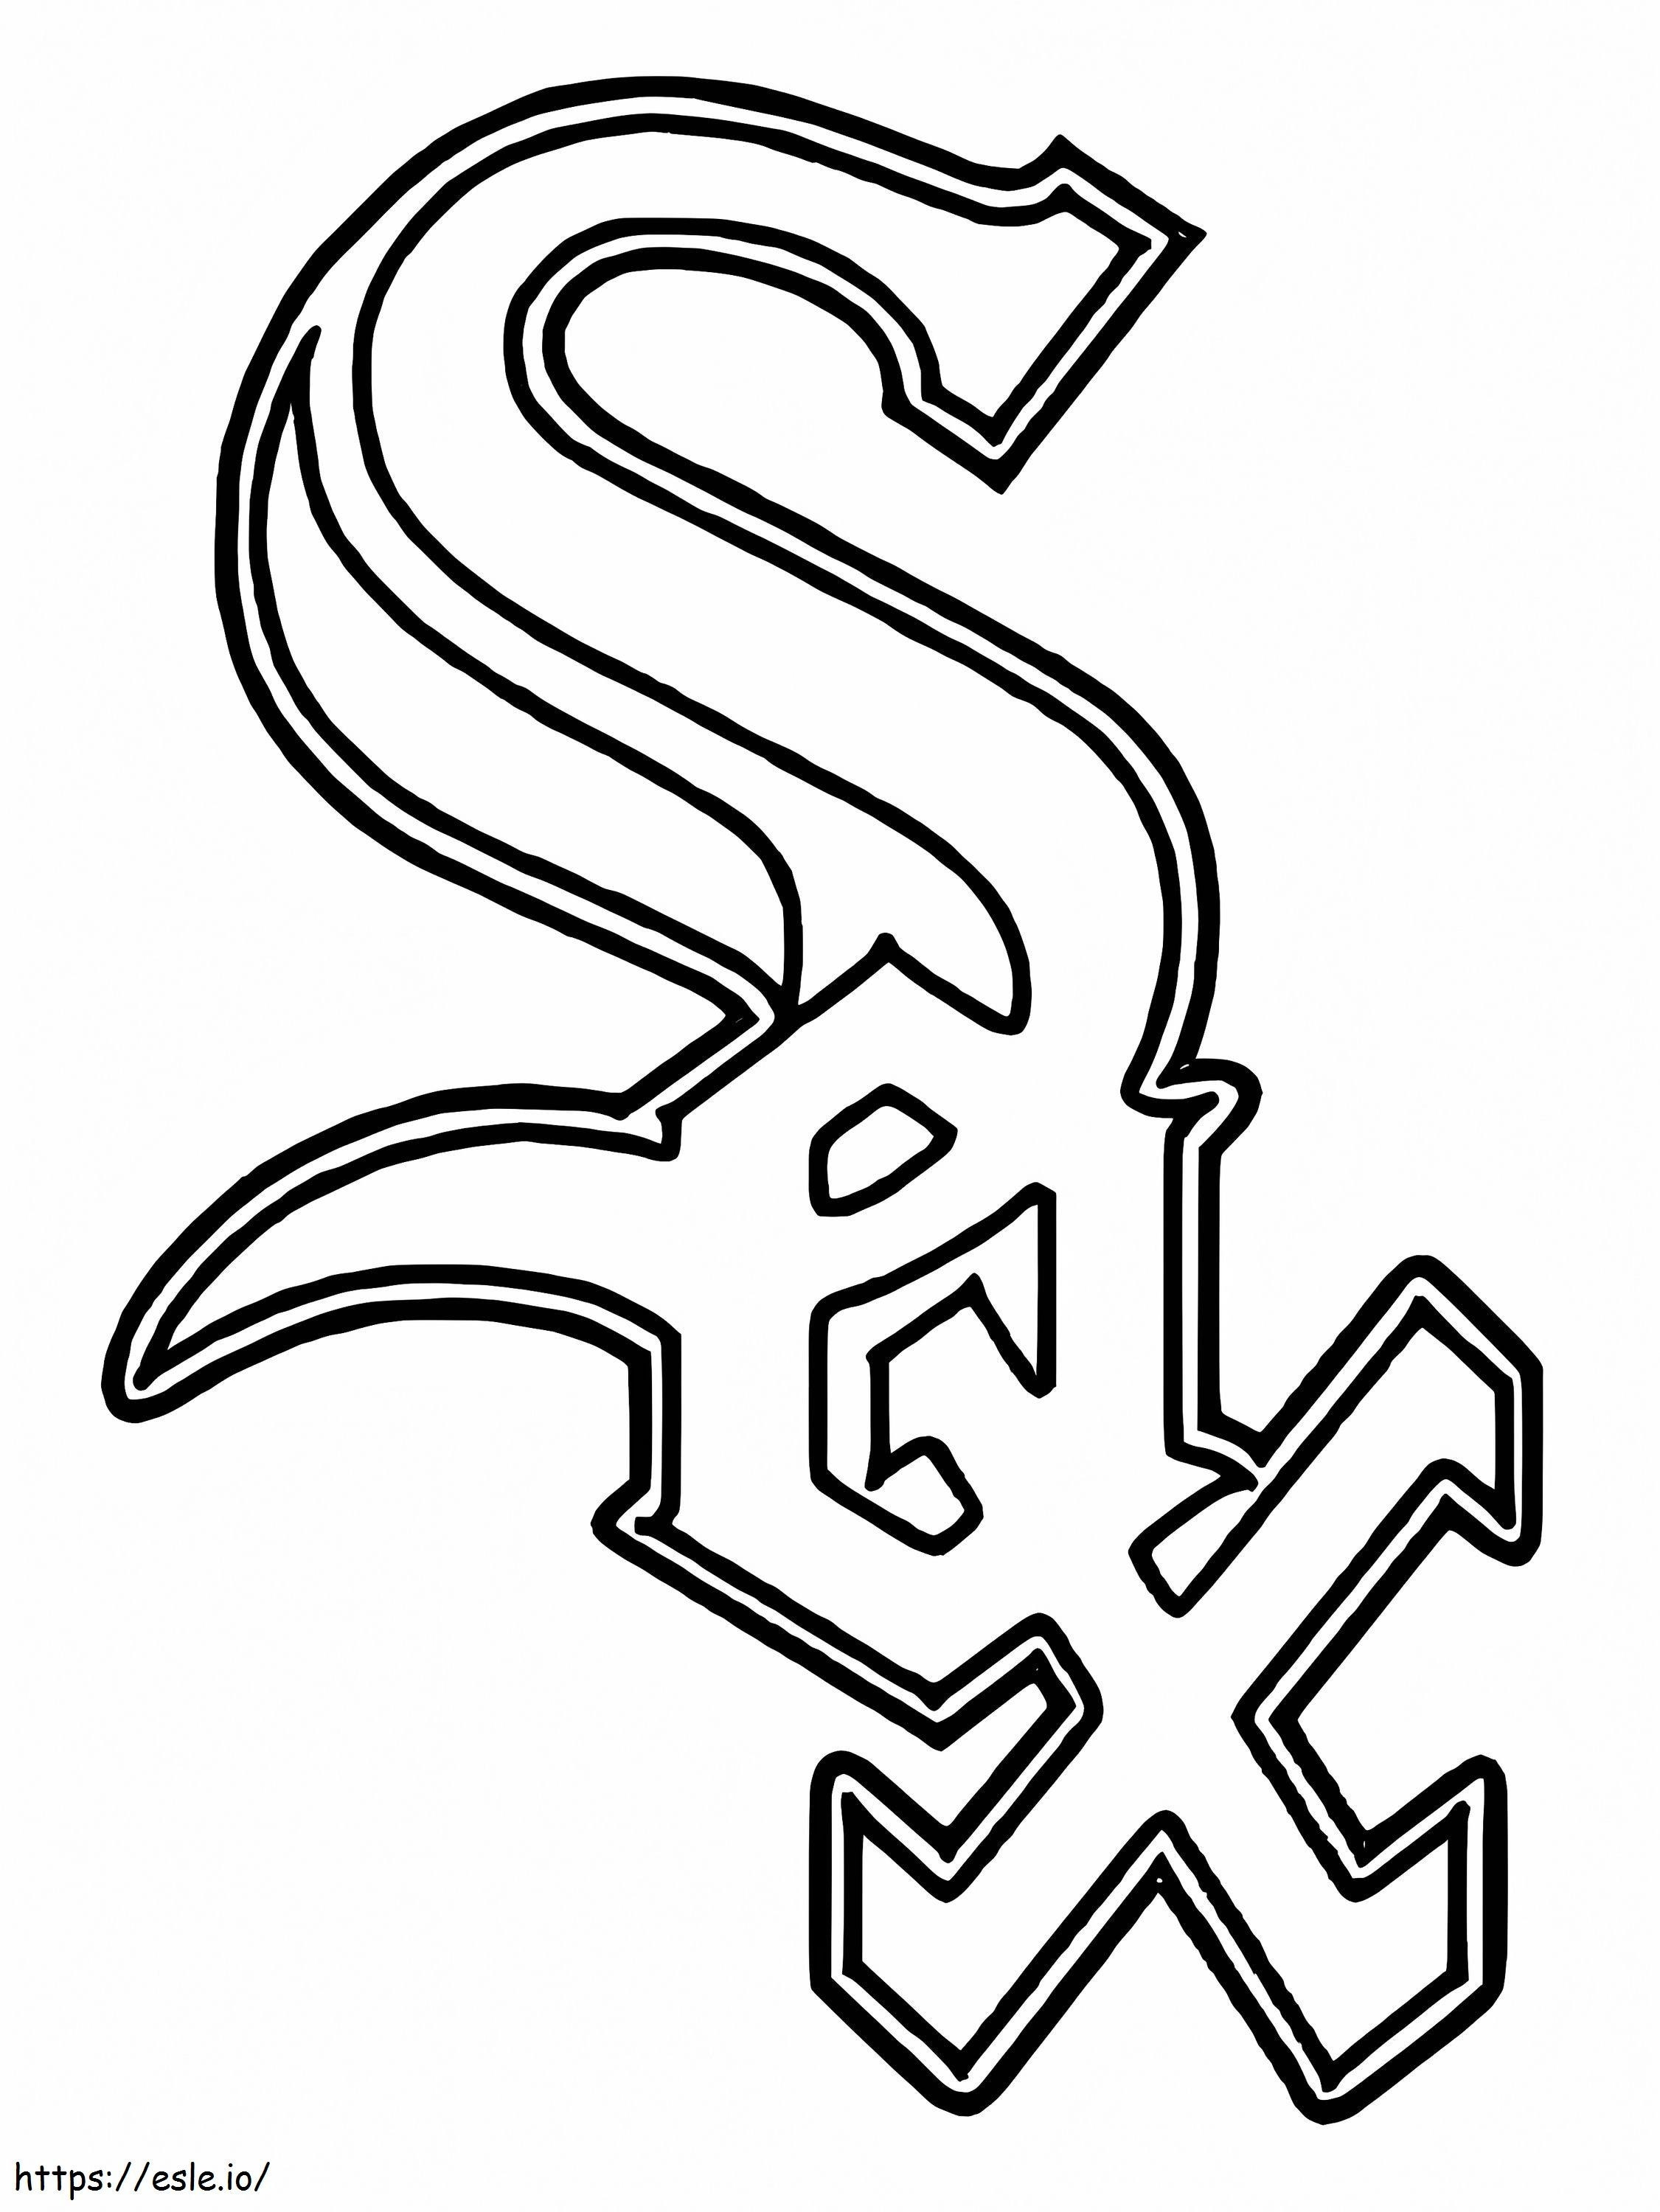 Chicago White Sox-logo kleurplaat kleurplaat